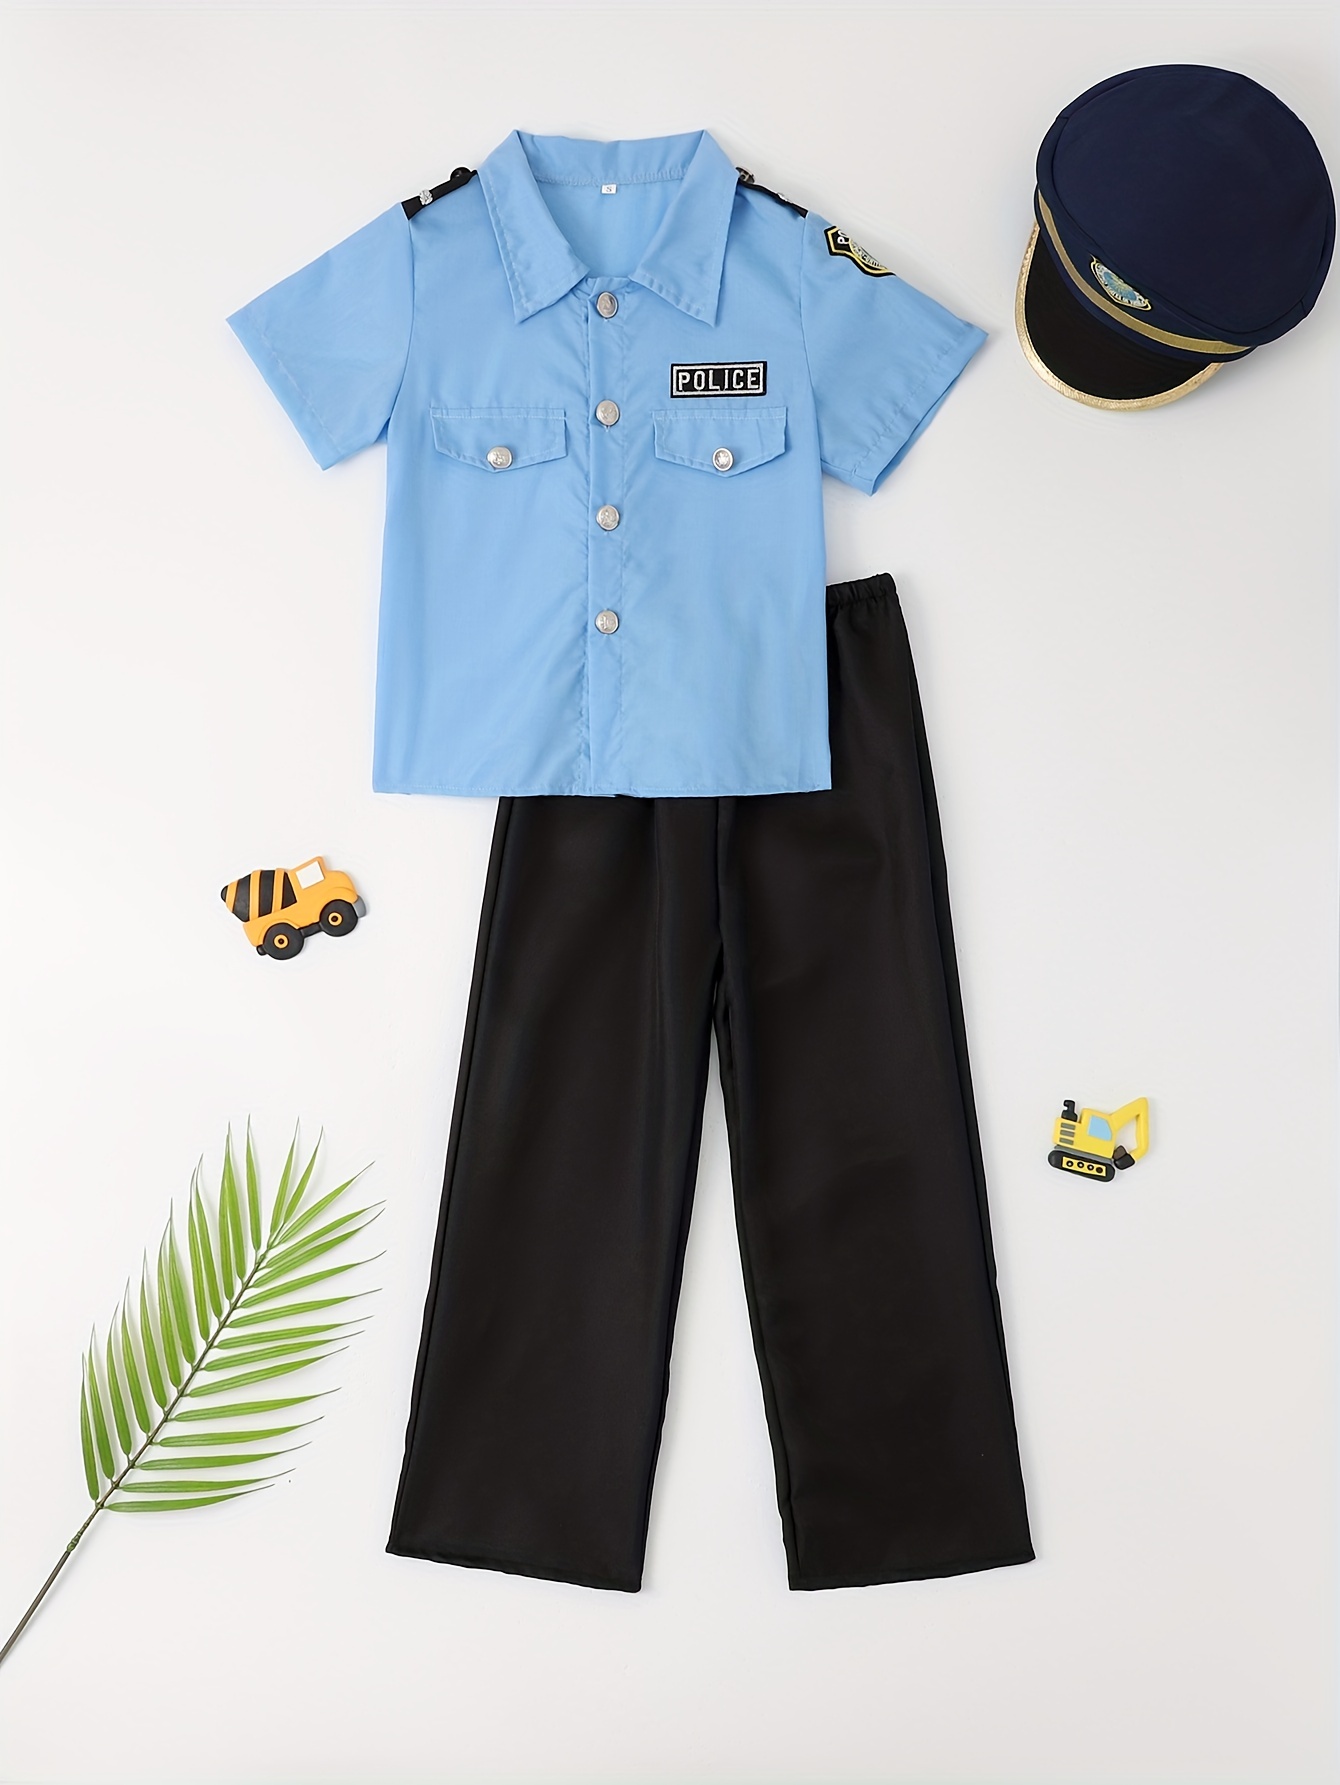 Costume d'enfant en uniforme de police de police Costume de cosplay